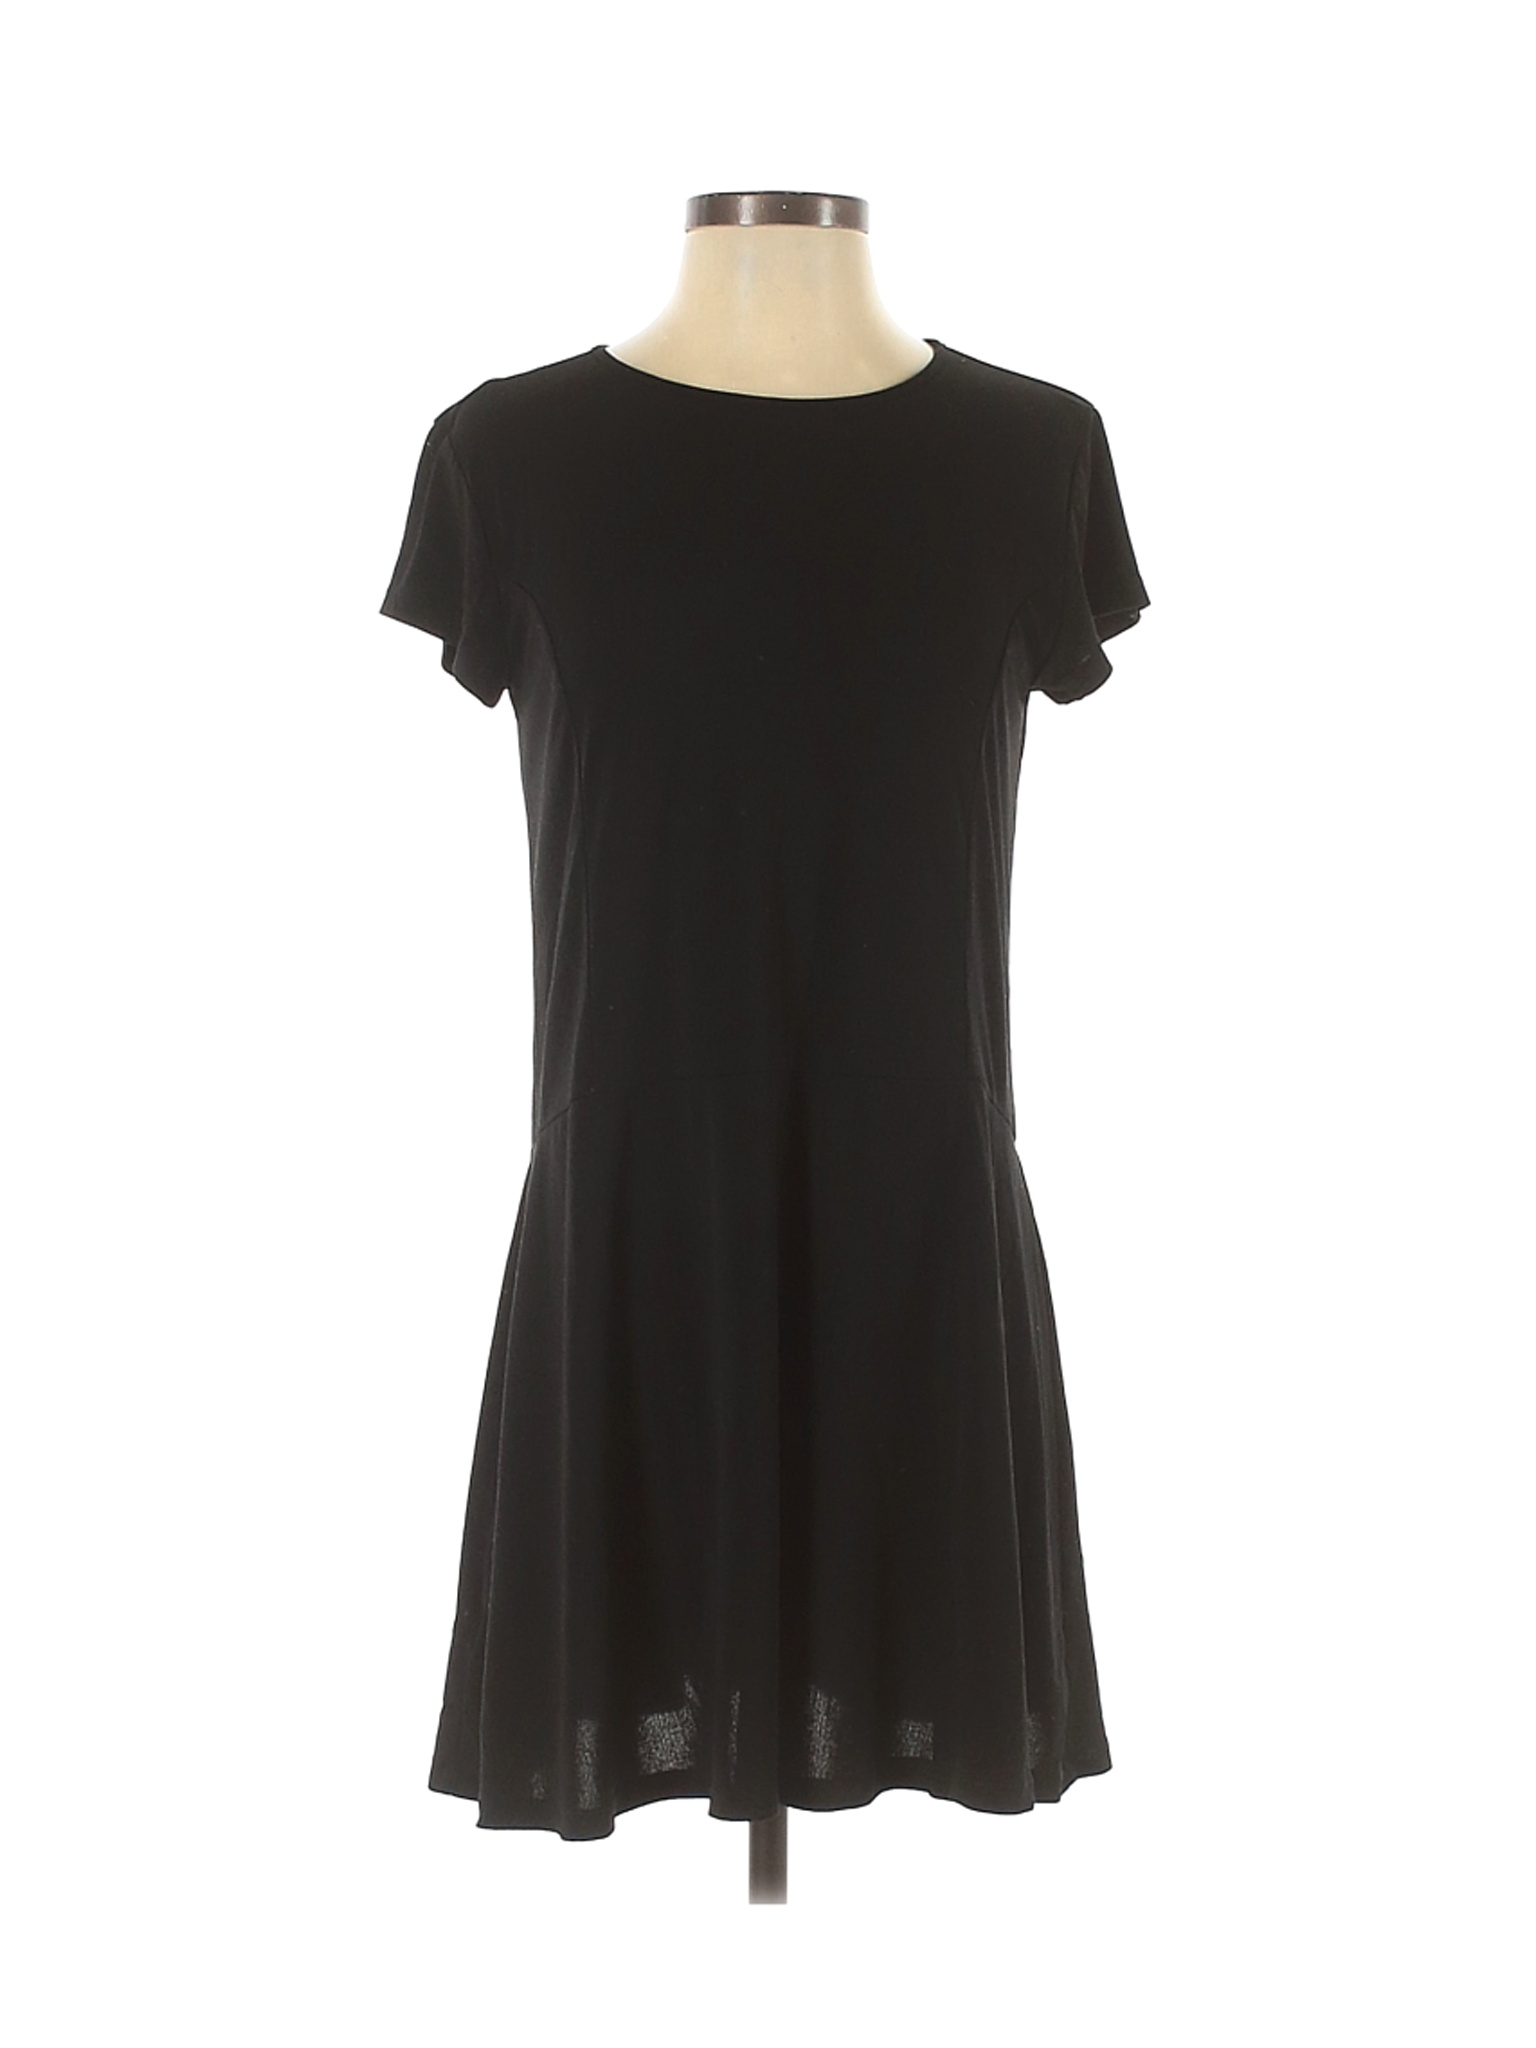 MNG Basics Women Black Casual Dress 2 | eBay